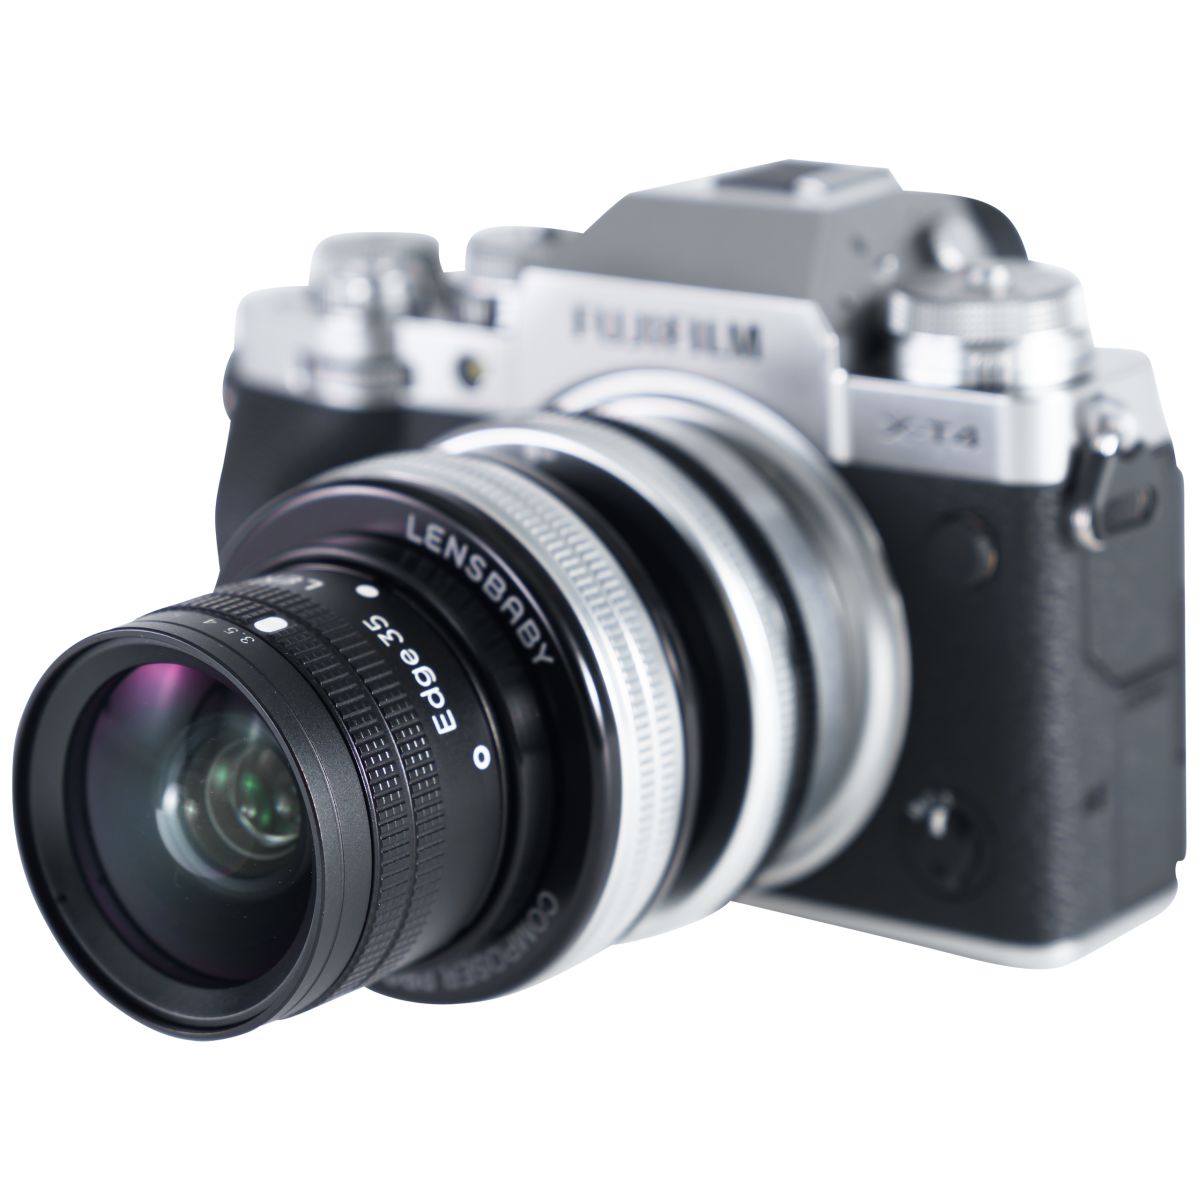 Lensbaby Composer Pro II Edge 35 Canon EF